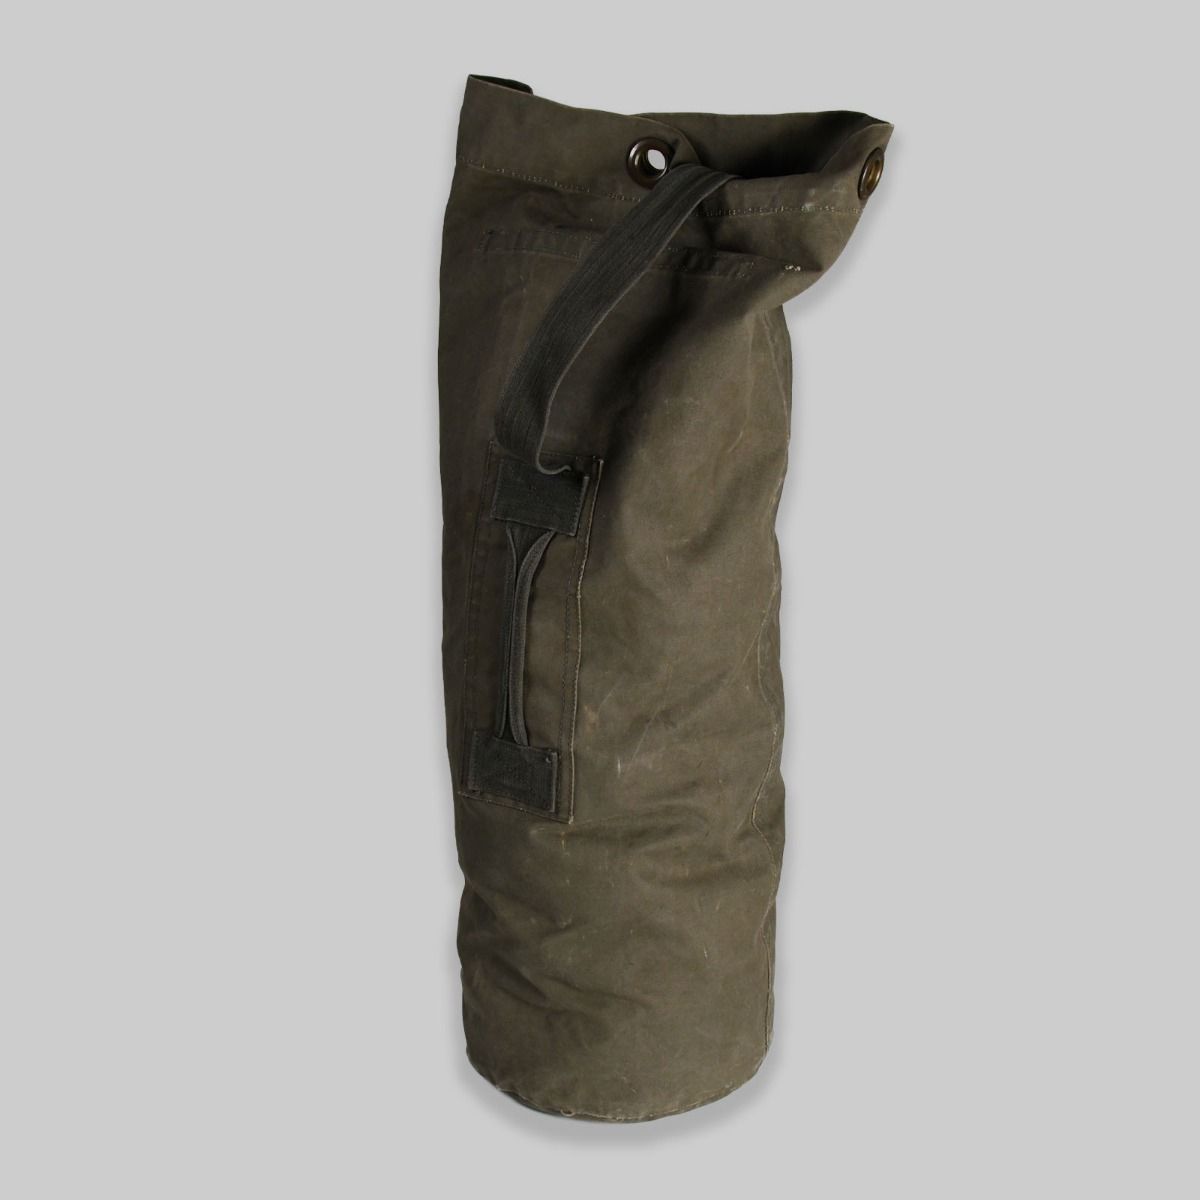 Vintage British Army 1967 Duffle Kit Bag